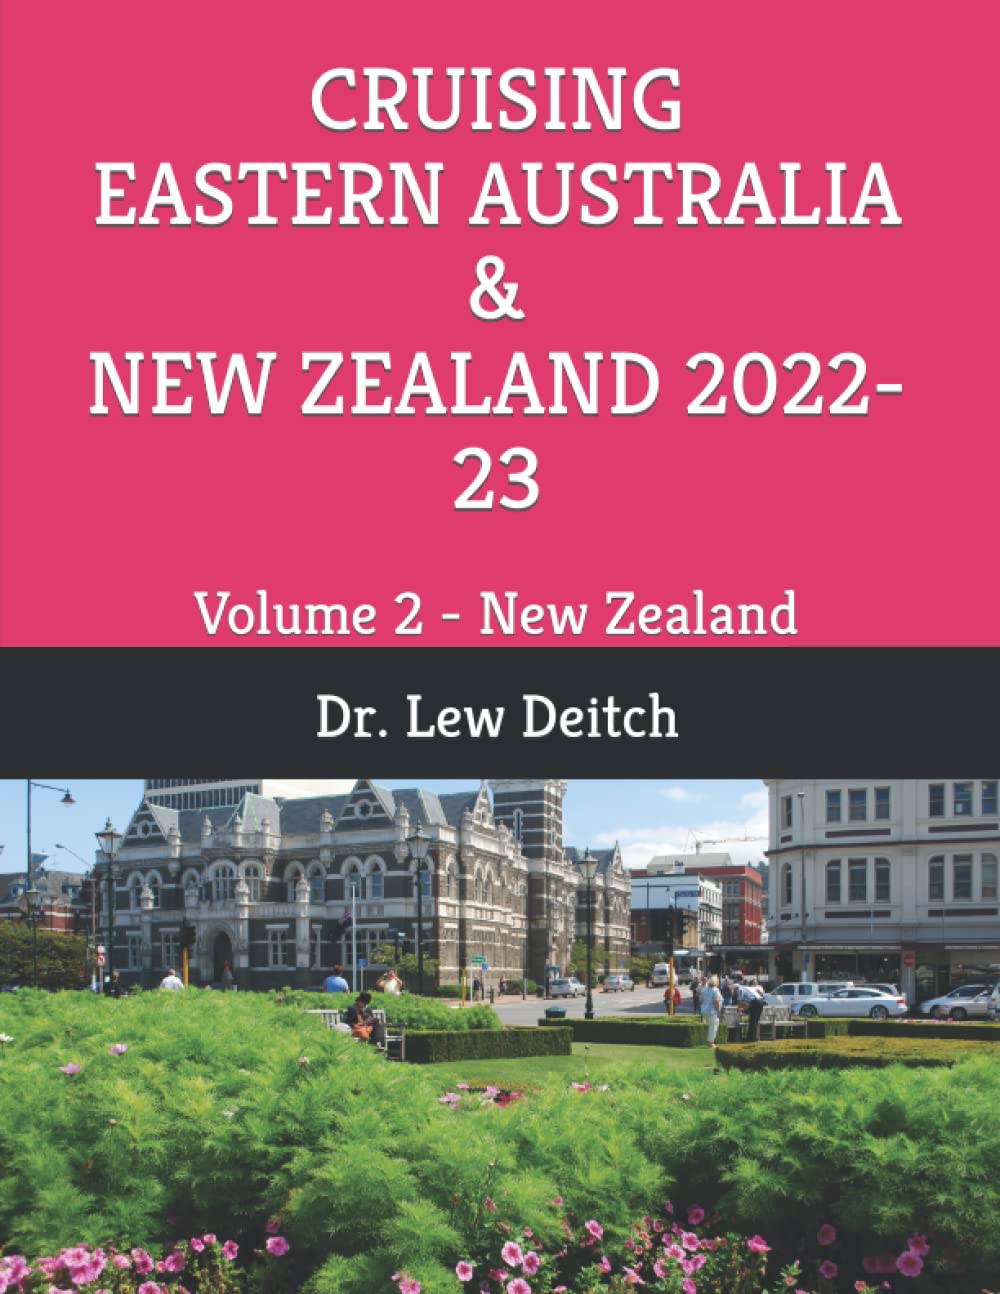 CRUISING EASTERN AUSTRALIA & NEW ZEALAND 2022-23: Volume 2 - New Zealand